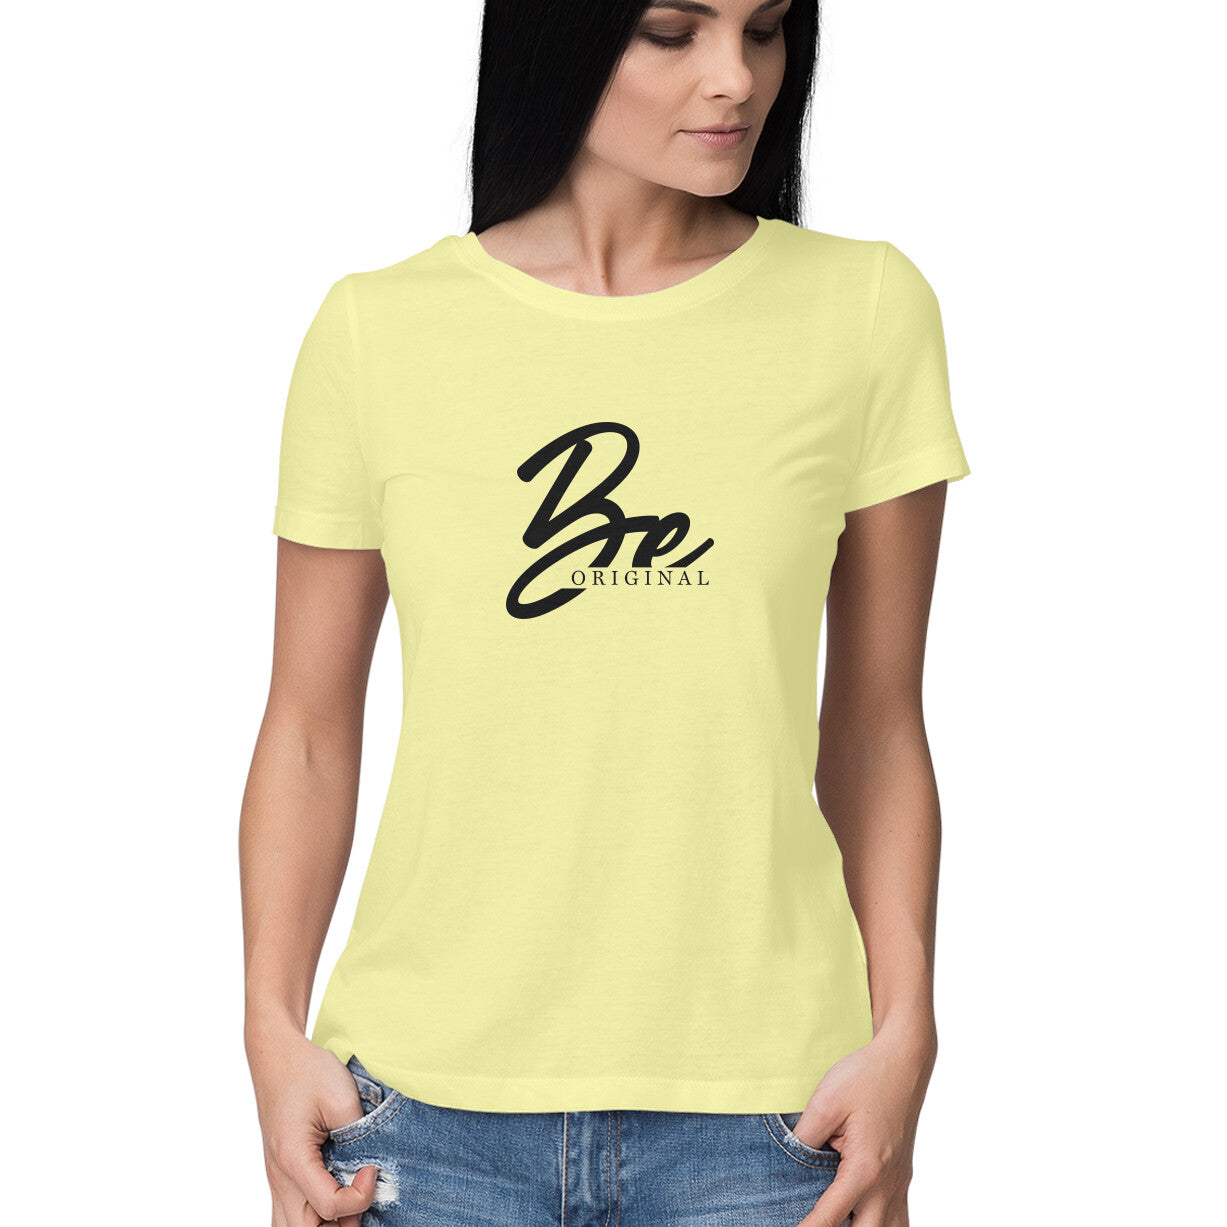 Be Original | Women's T-Shirt - FairyBellsKart